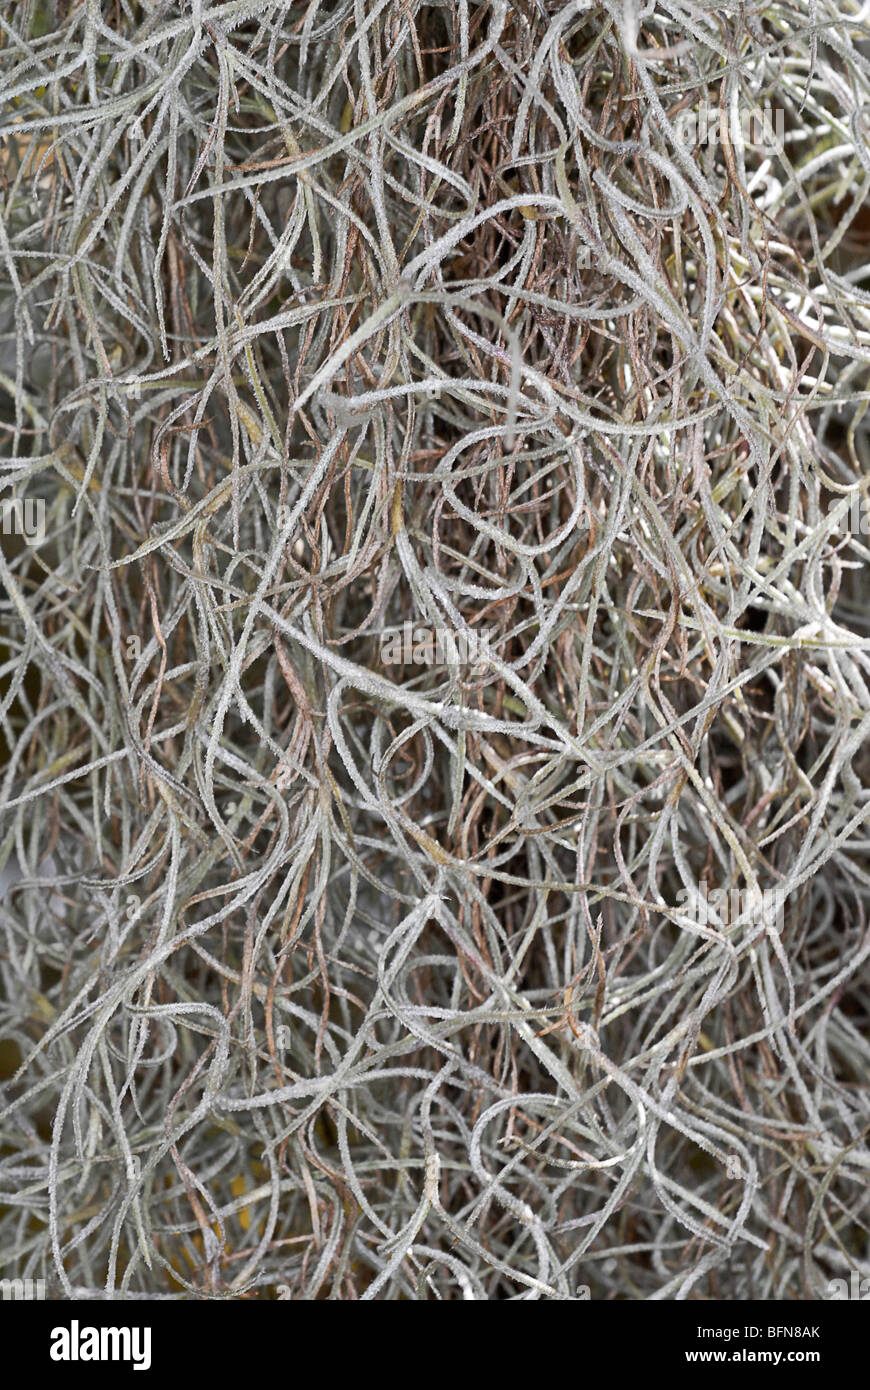 Muschio spagnolo (Tillandsia usneoides) è una pianta flowering in famiglia Bromeliaceae (le bromeliacee) Foto Stock